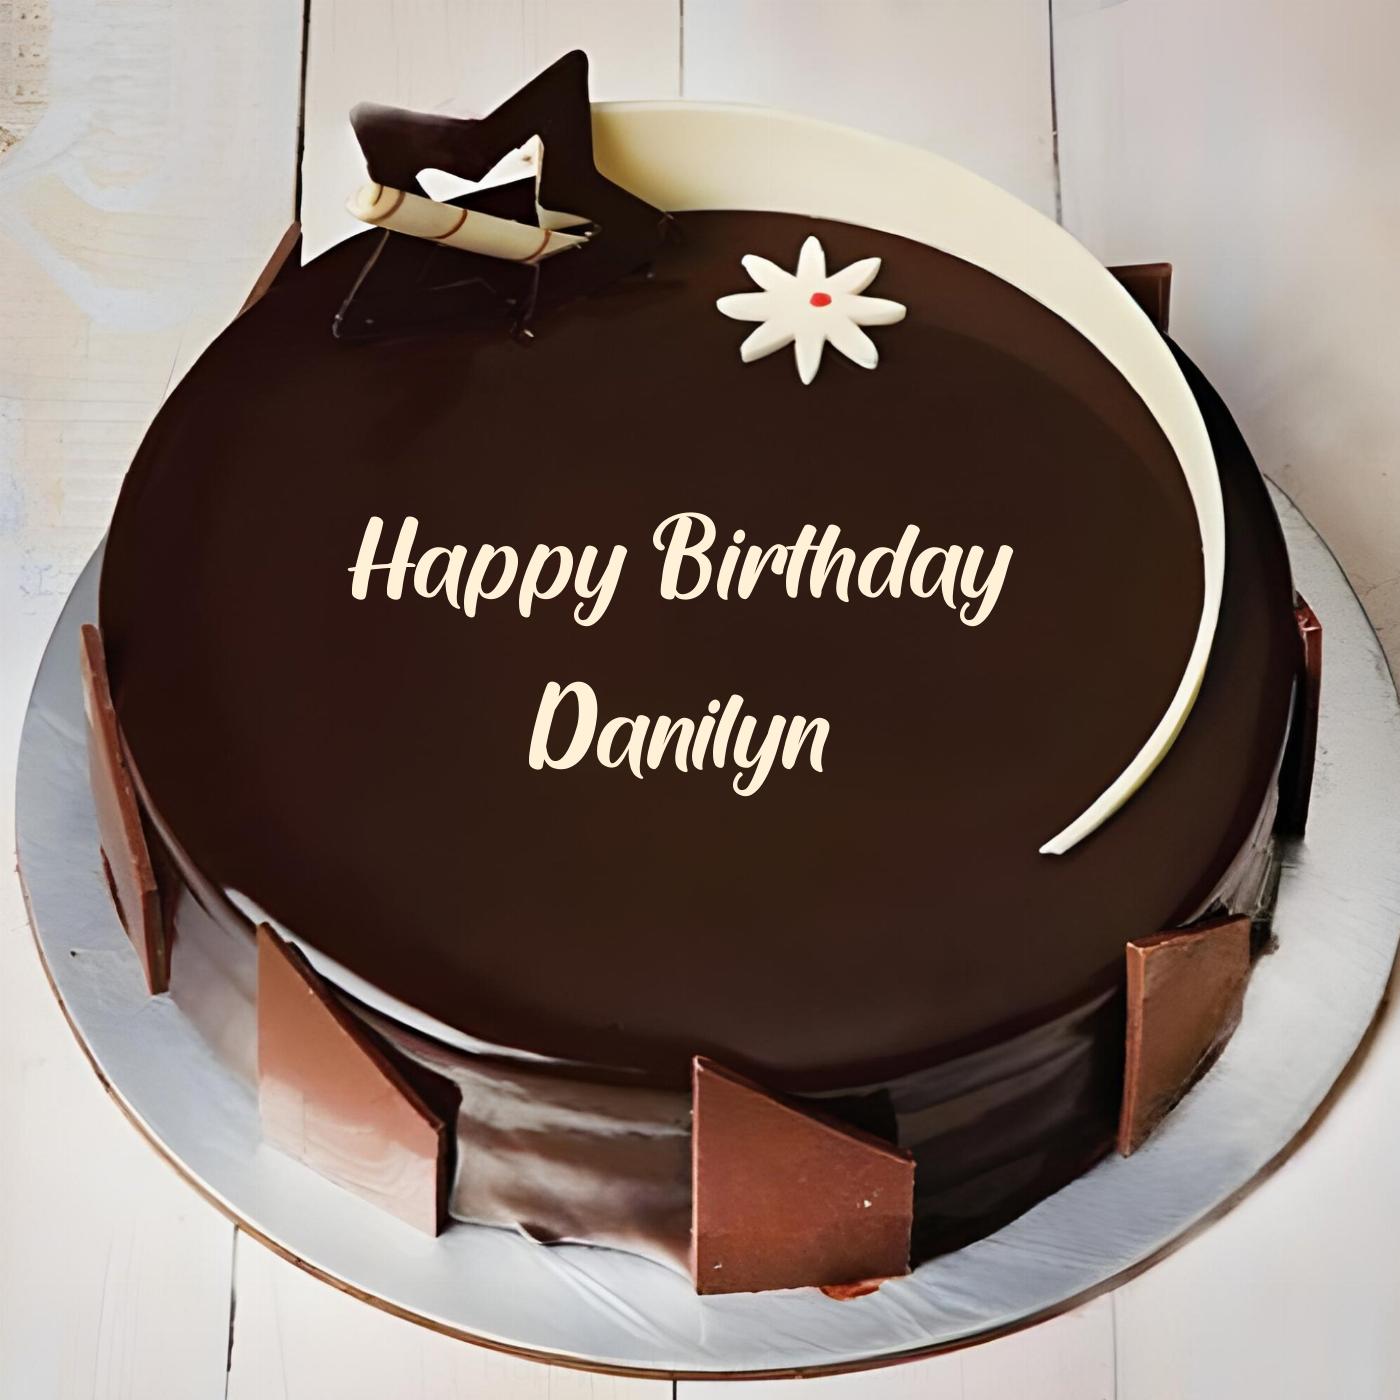 Happy Birthday Danilyn Chocolate Star Cake